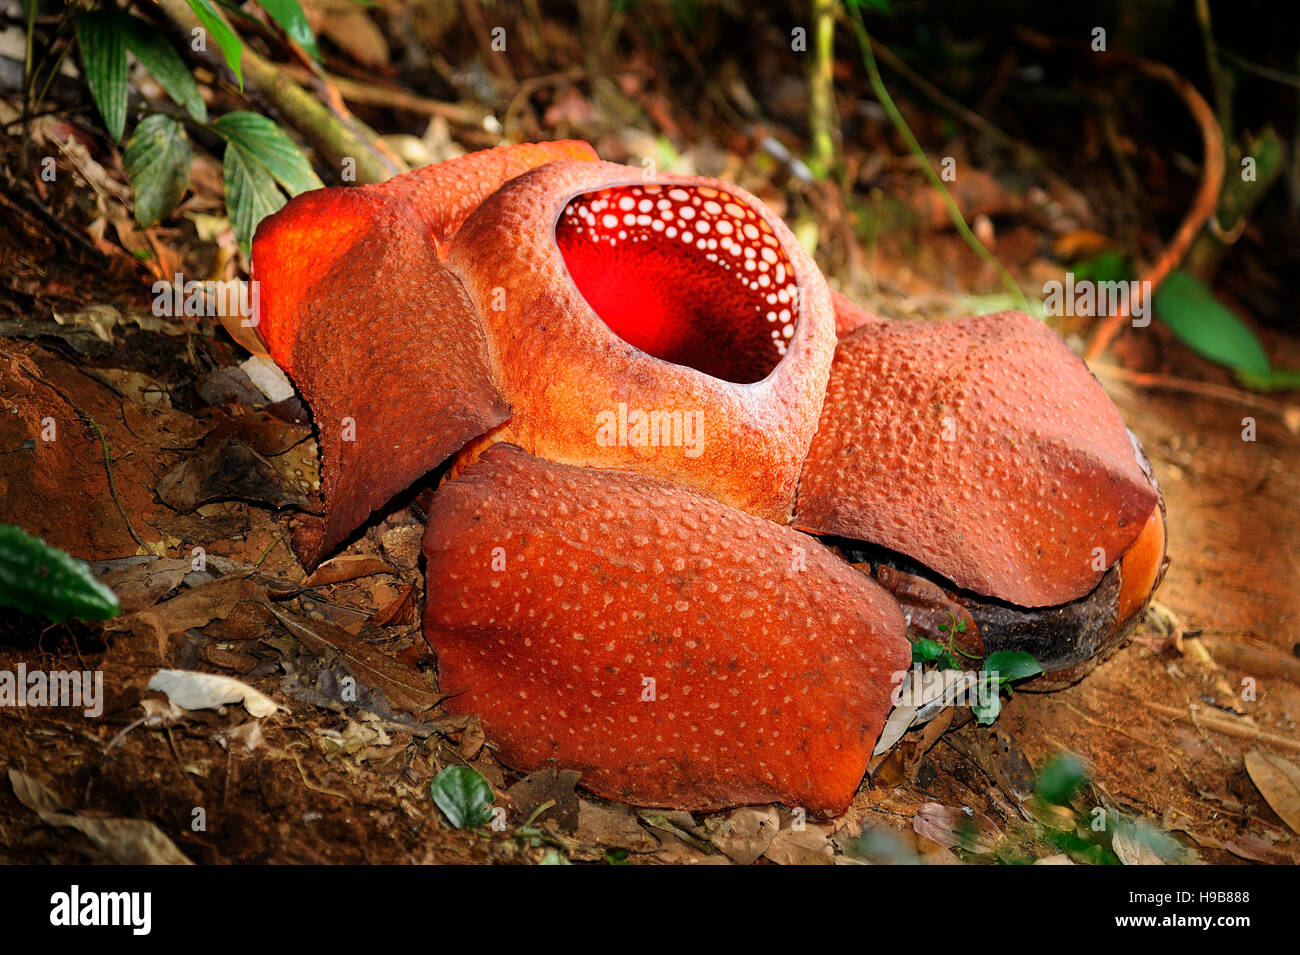 Rafflesia parasitic flowering plants. Stock Photo